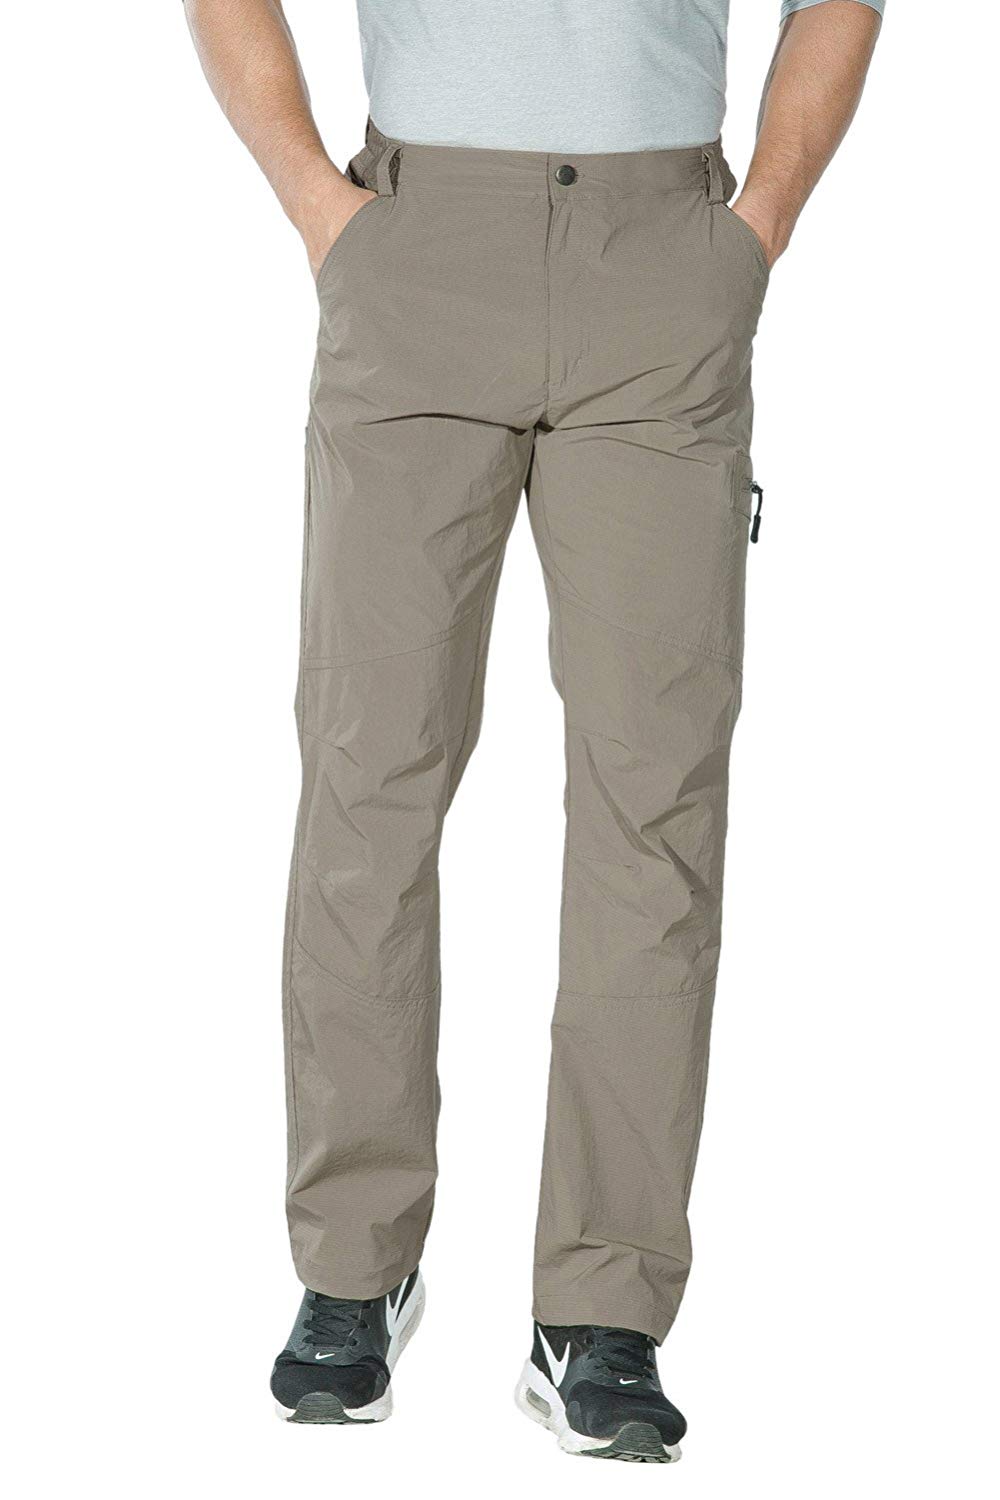 Hiking cargo pants for men